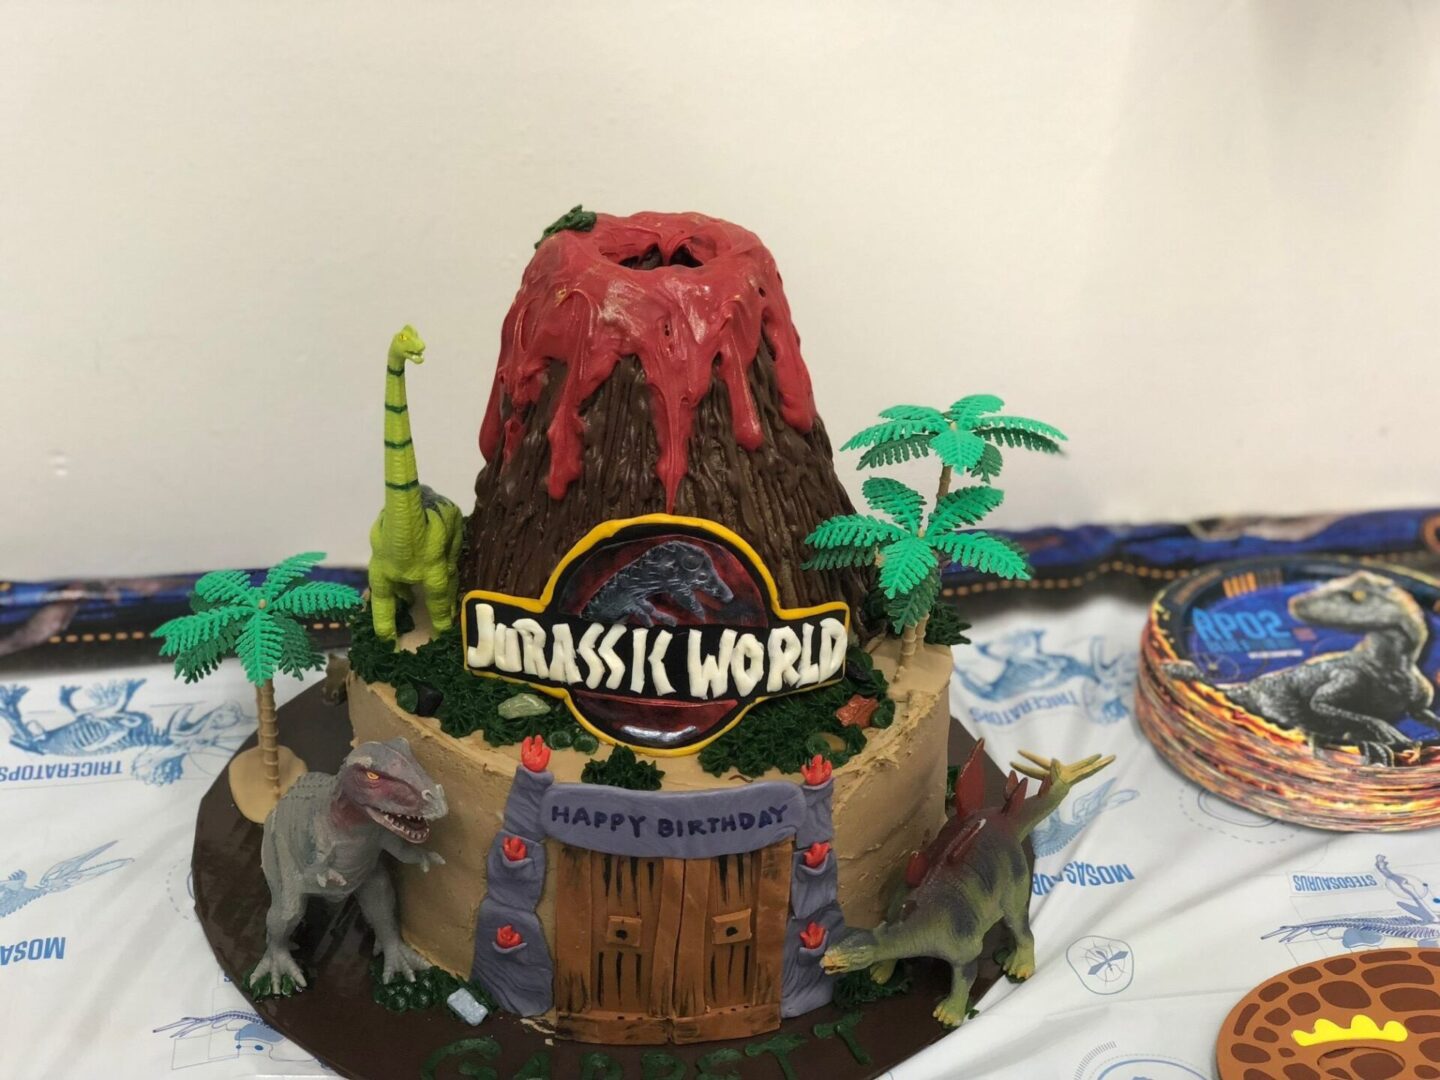 A cake that is shaped like a volcano.